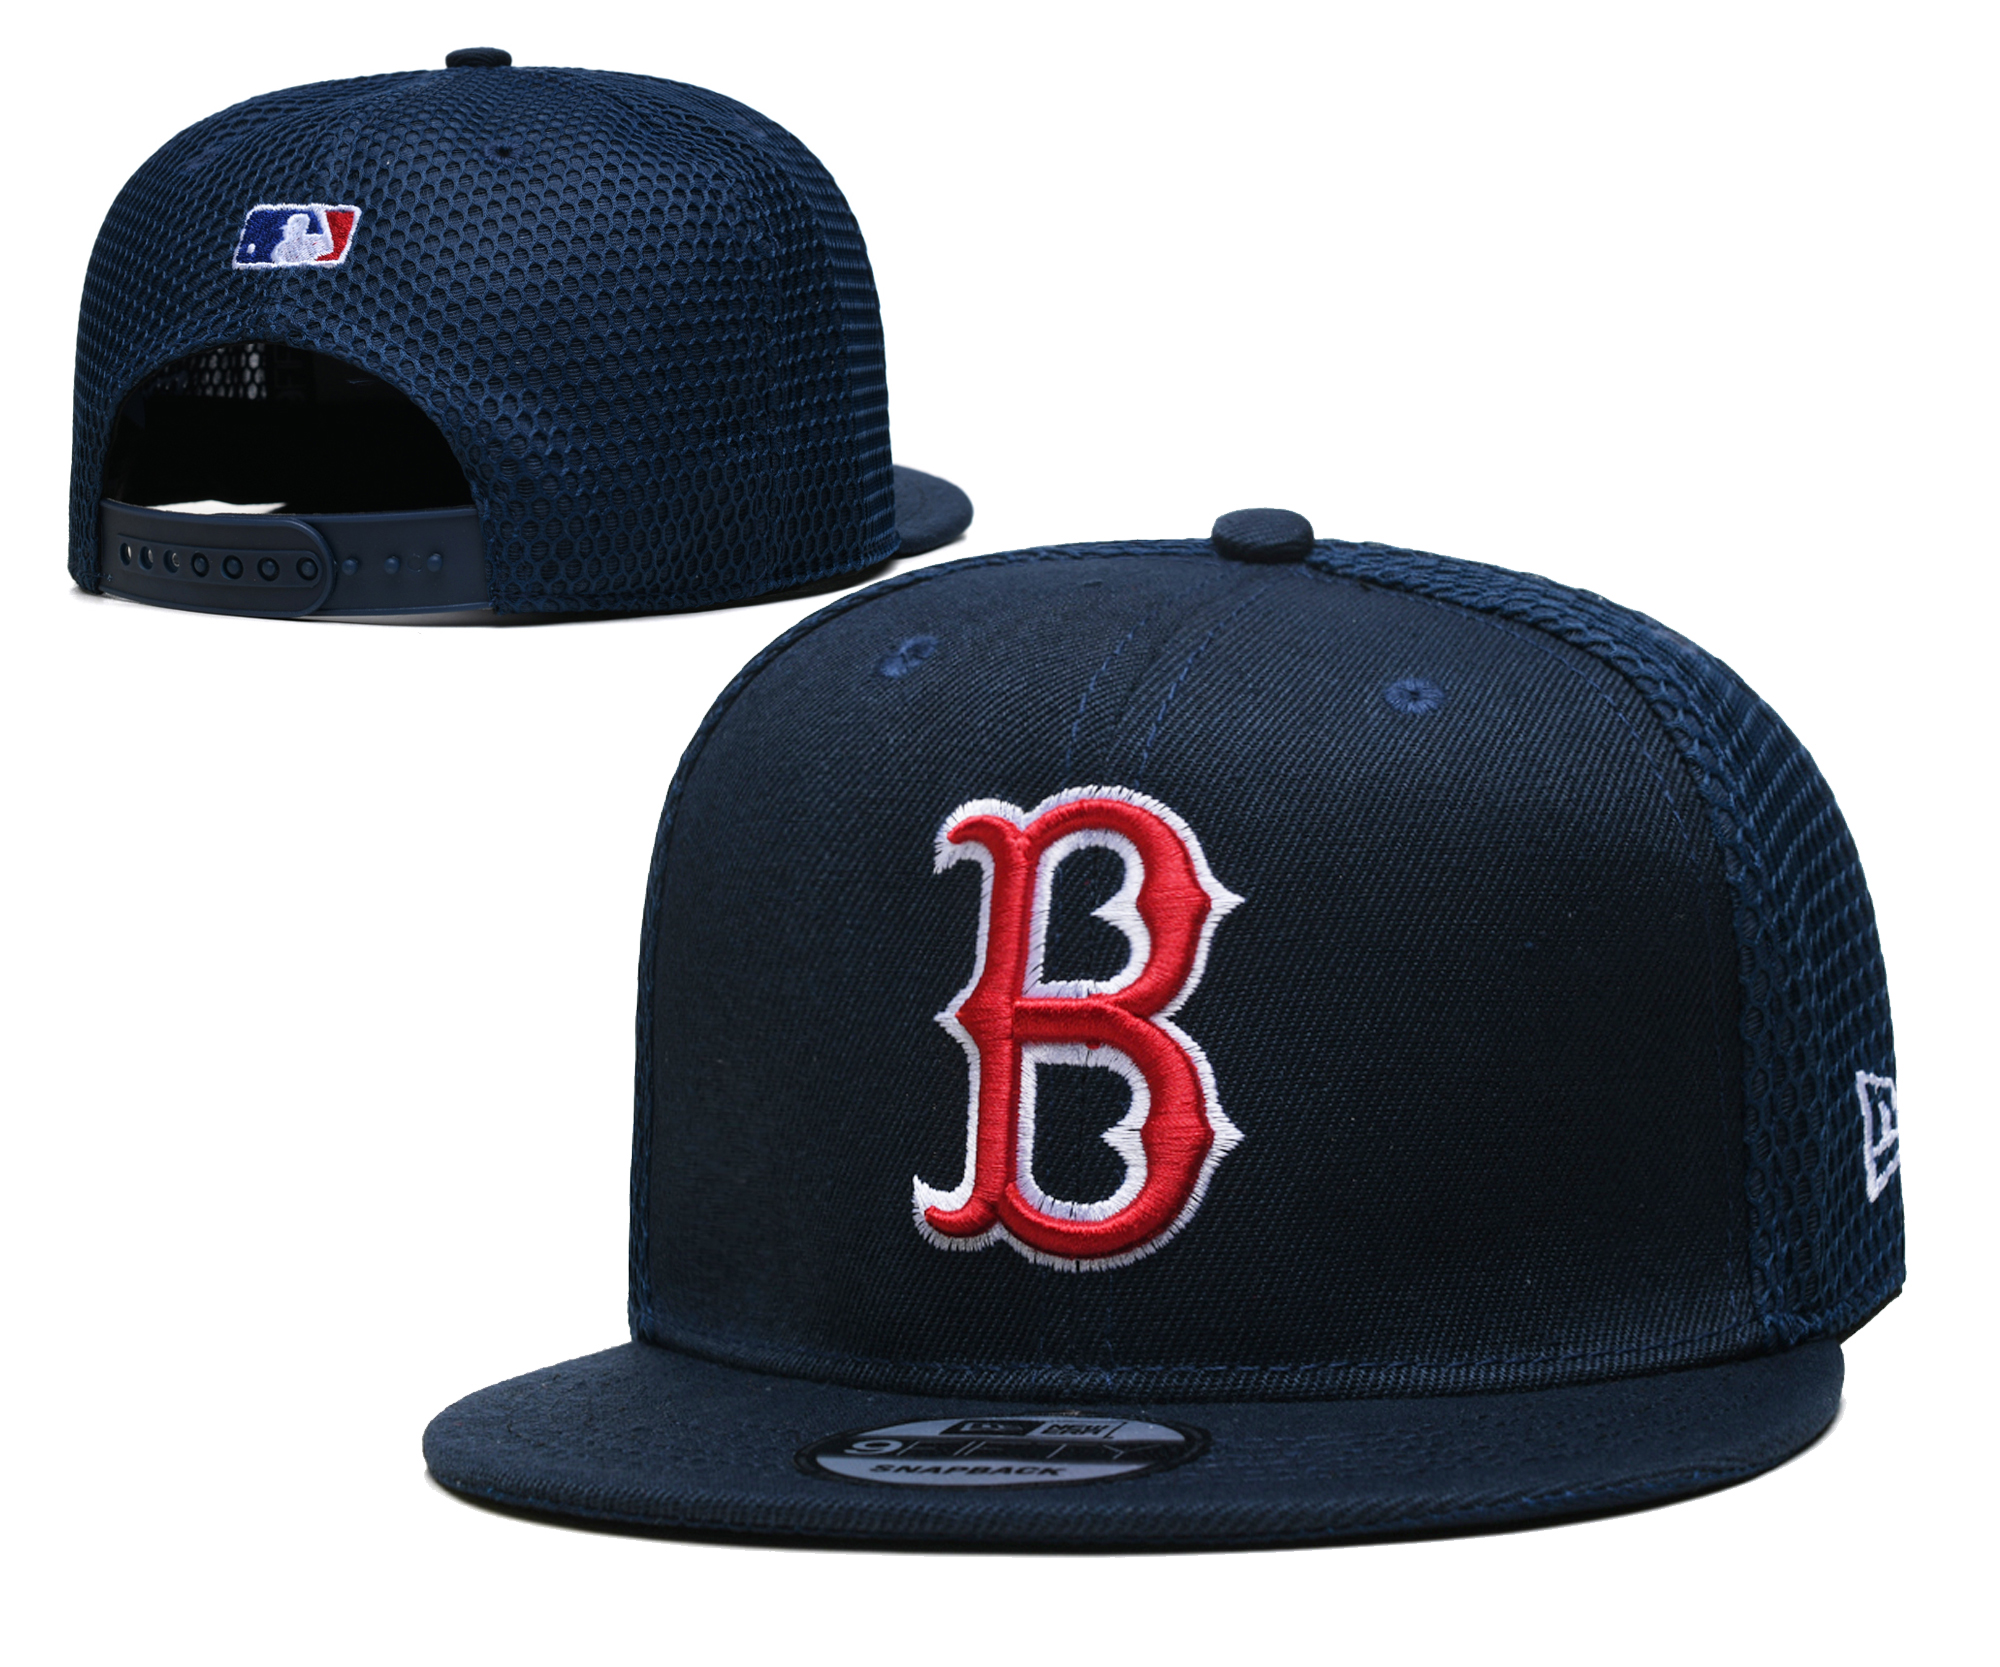 2021 MLB Boston Red Sox #13 TX hat